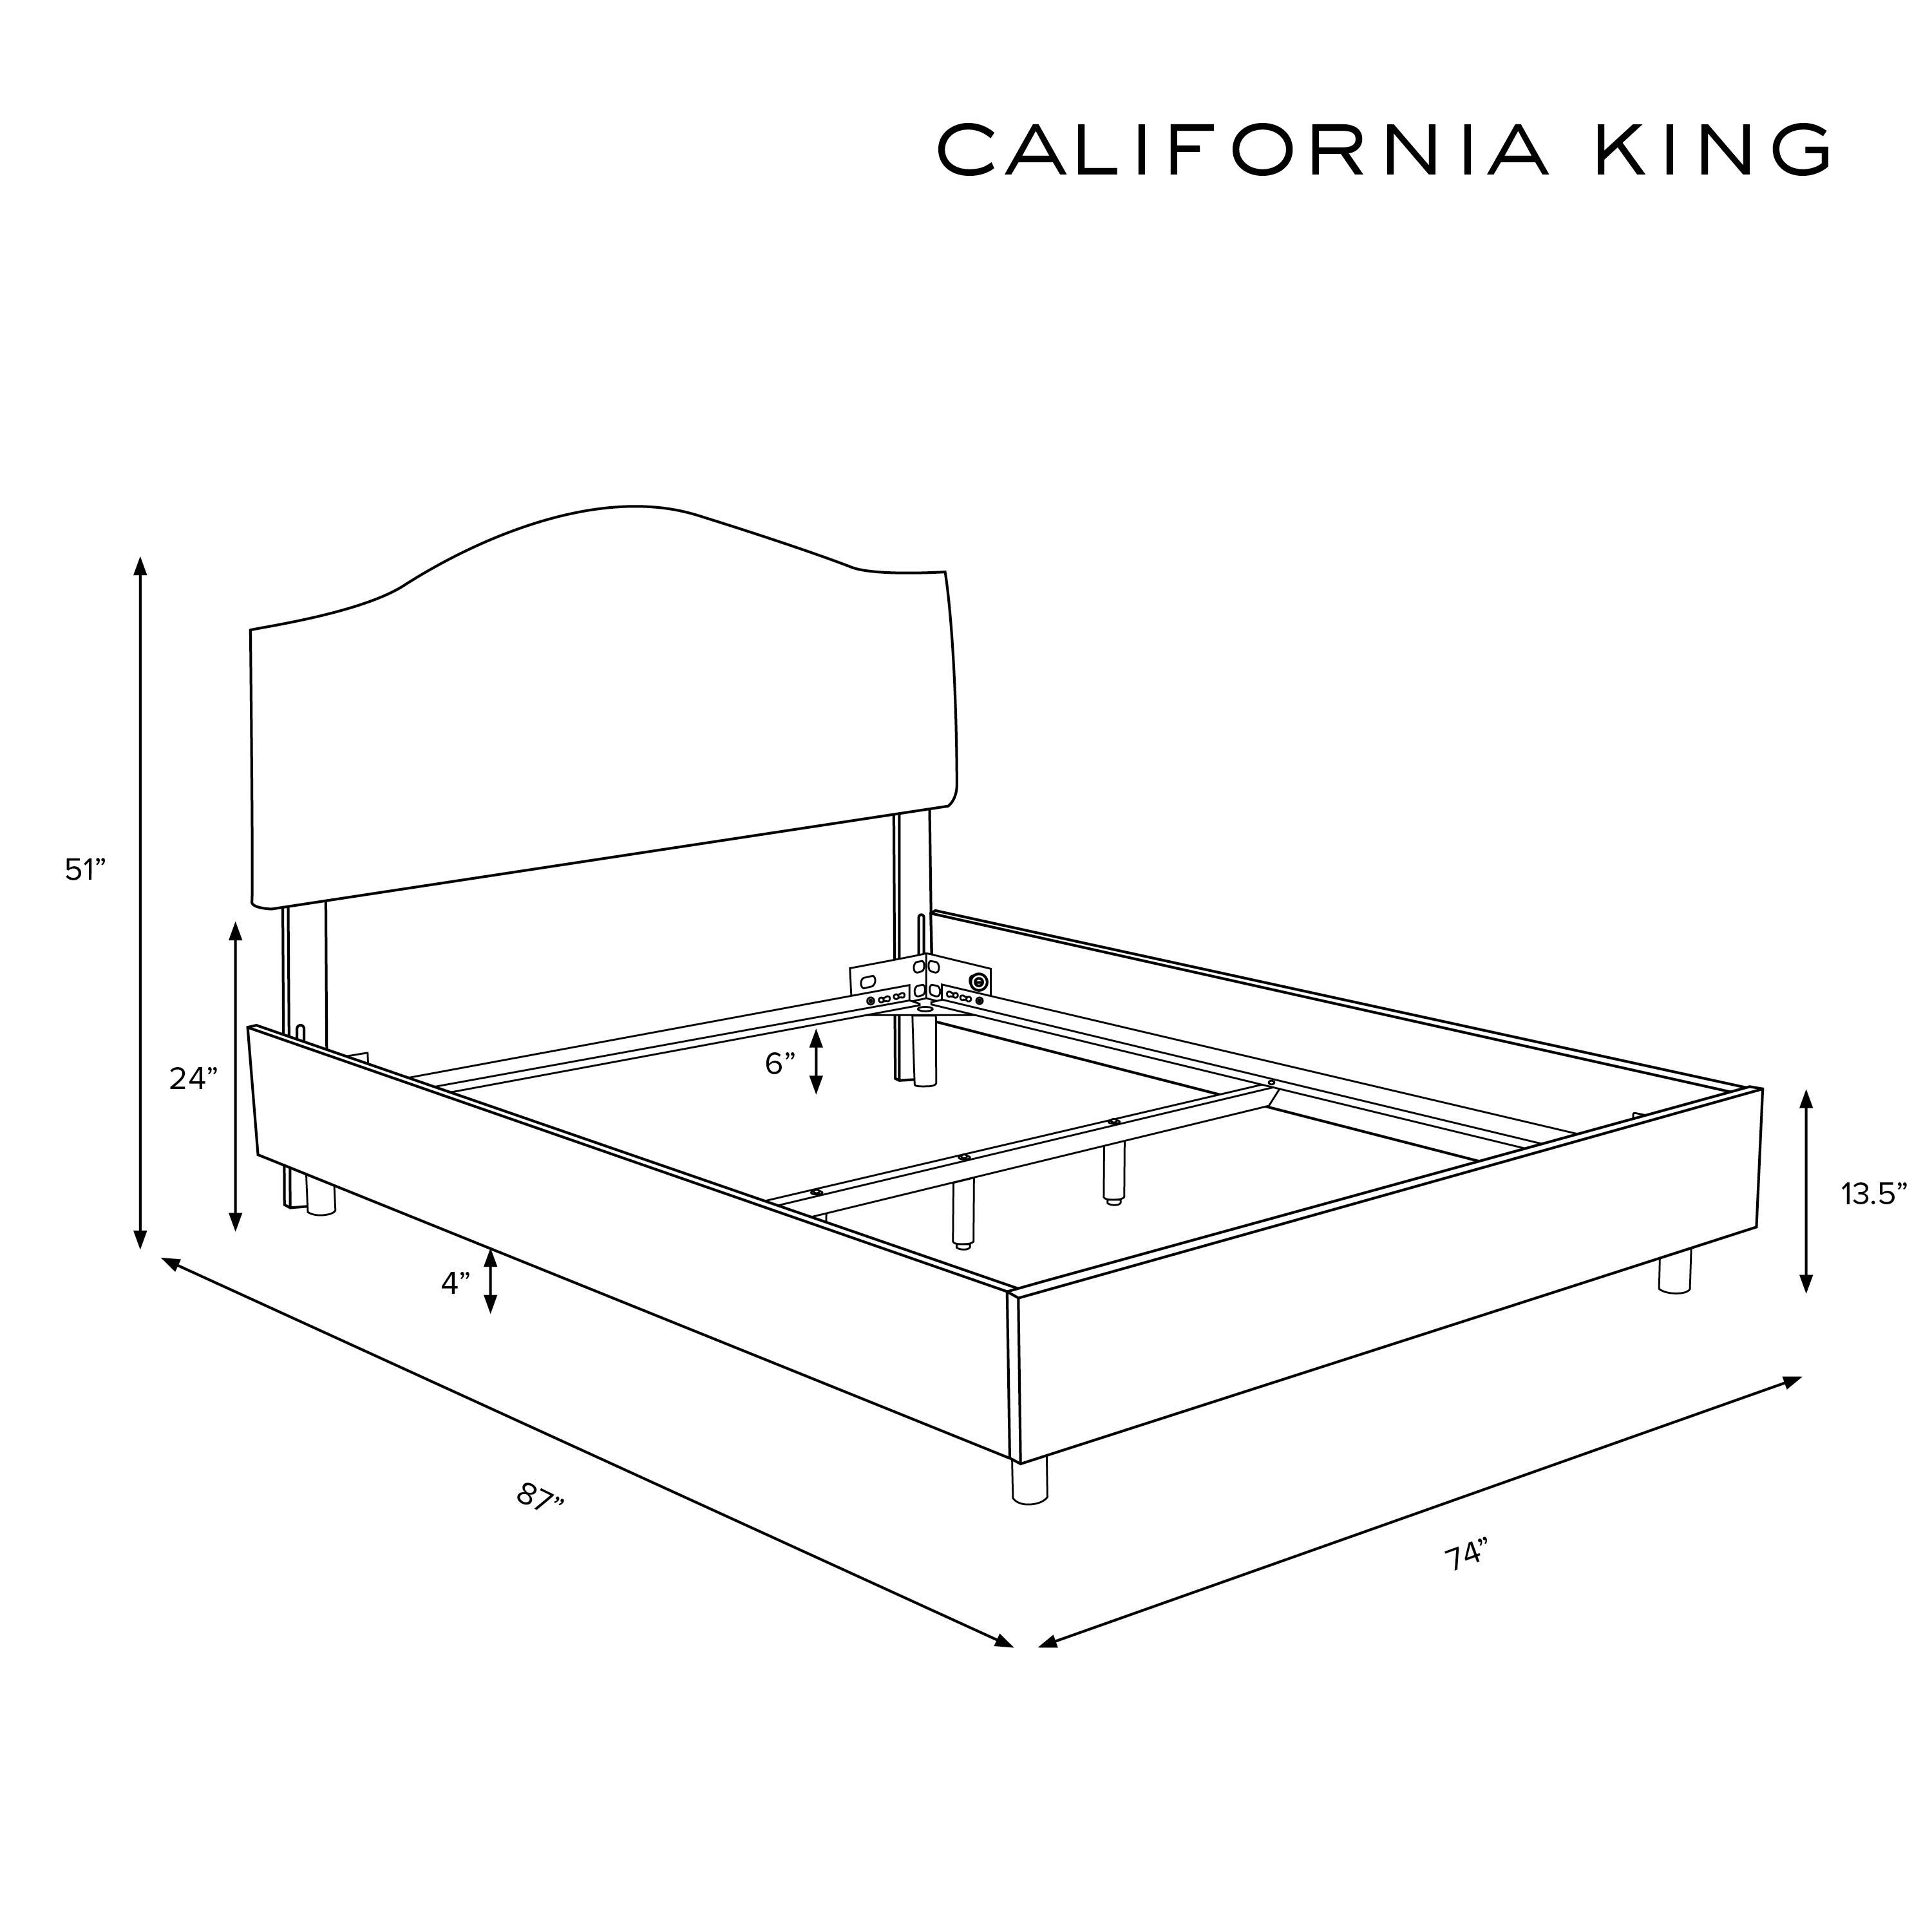 California King Kenmore Bed in Zuma Pumice - Image 5